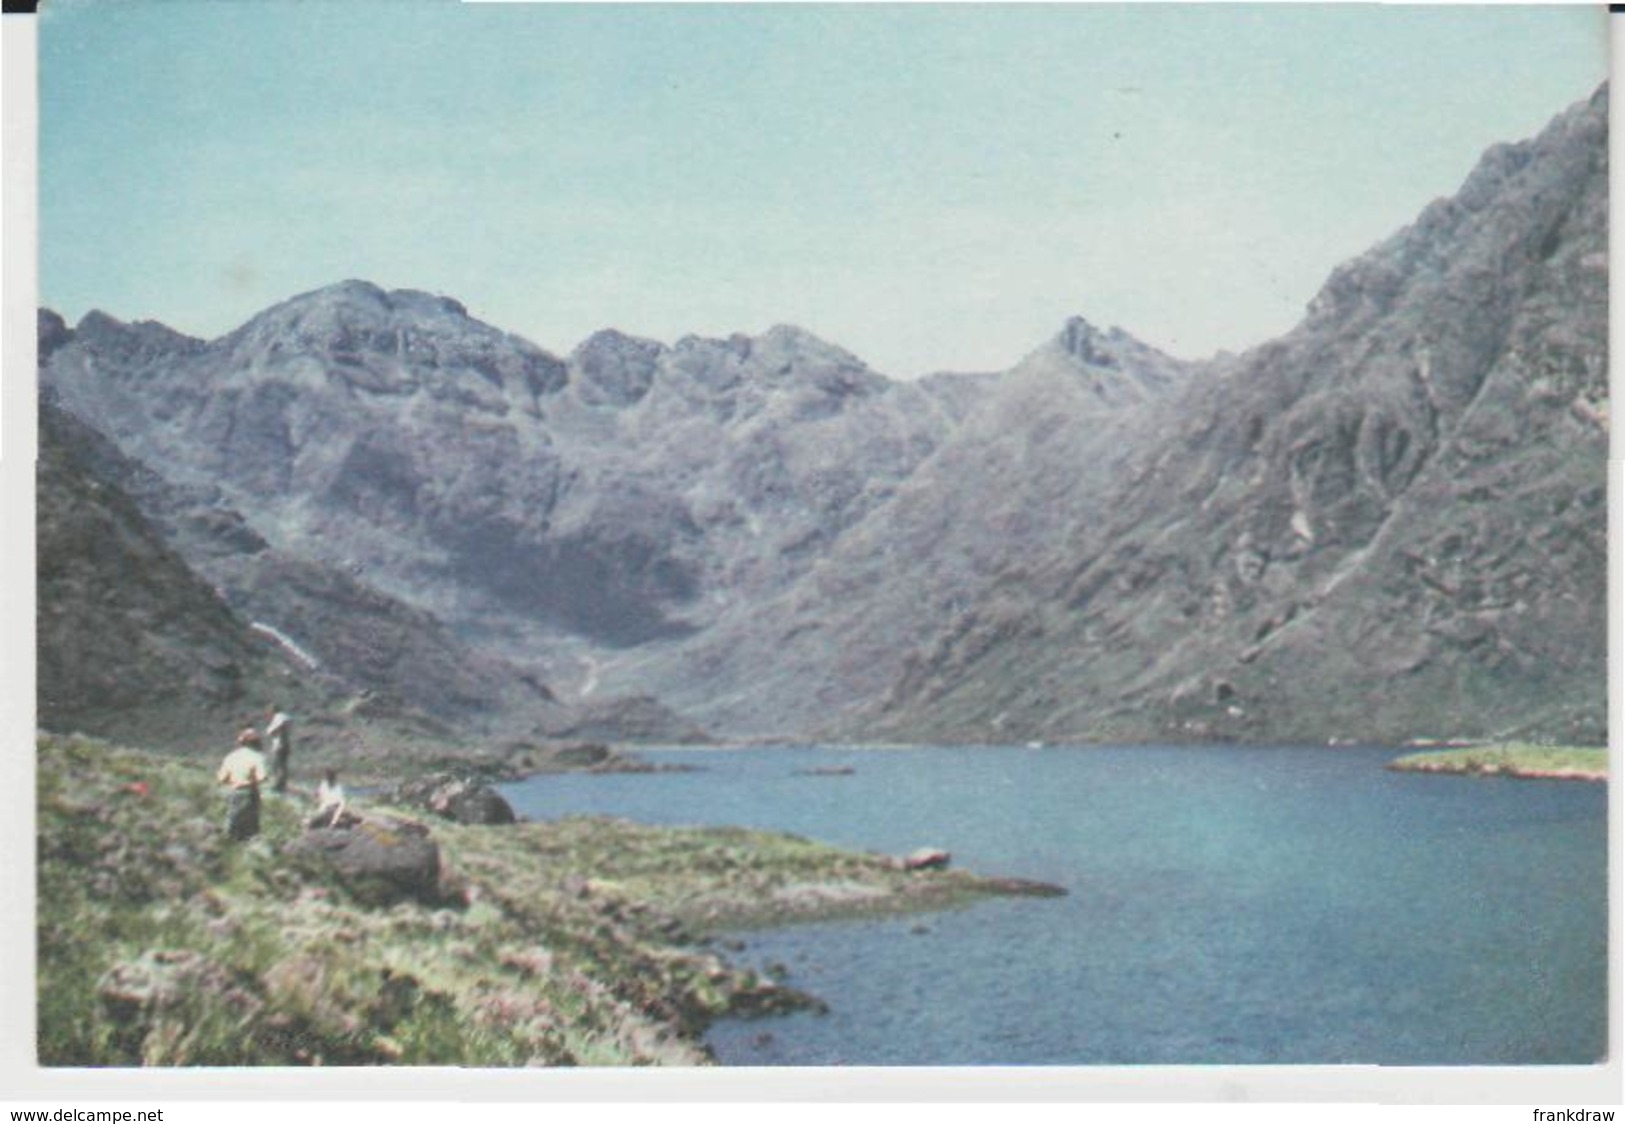 Postcard - Loch Coruisk, Isle Of Skye - Card No..3825 - Unused Very Good - Unclassified